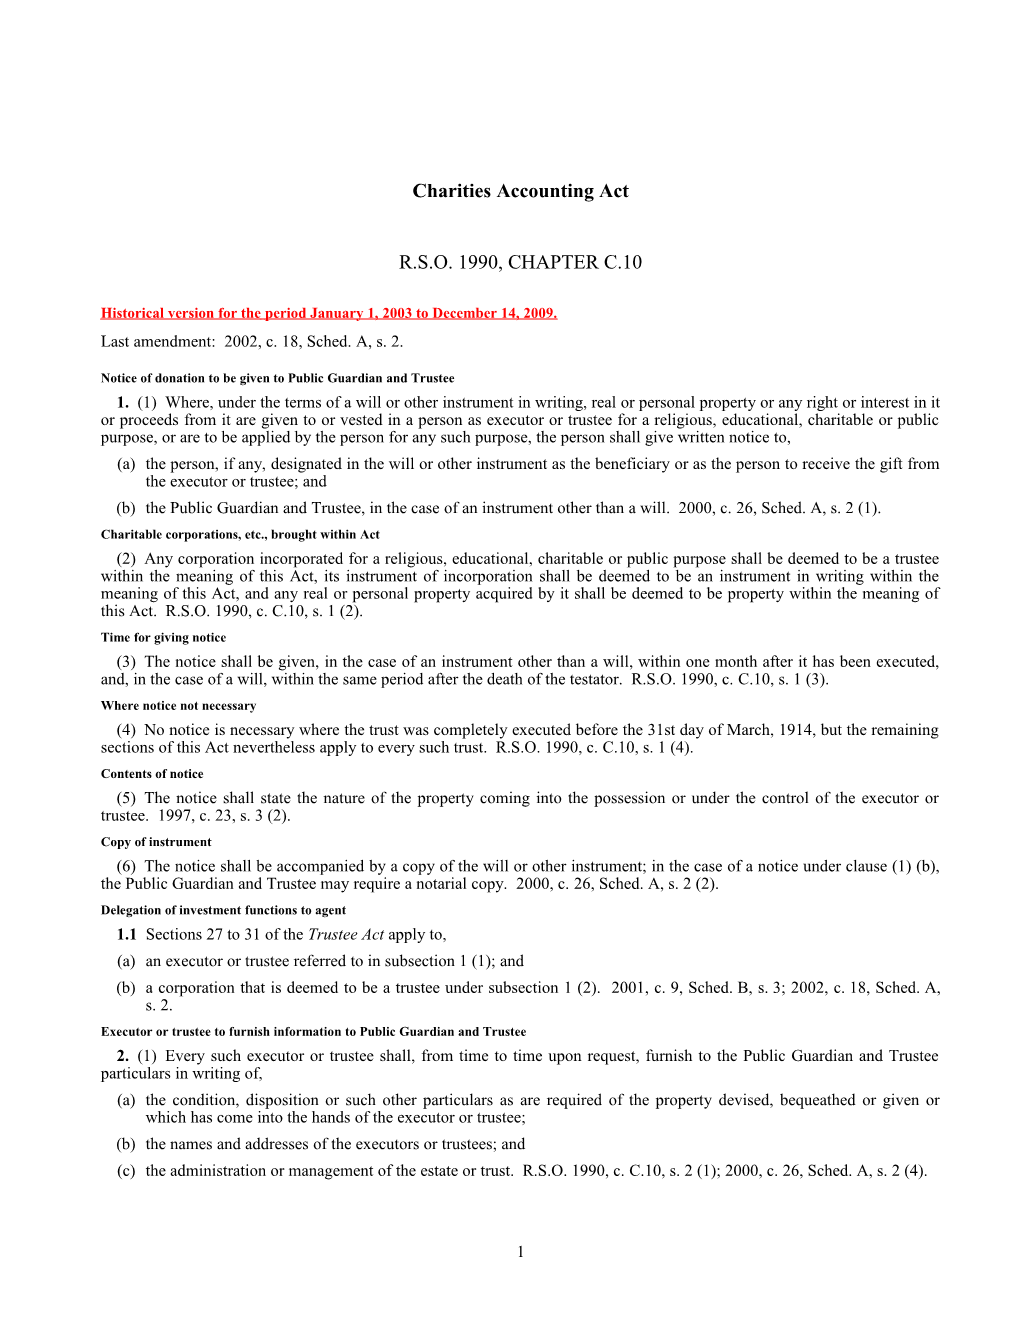 Charities Accounting Act, R.S.O. 1990, C. C.10 s1